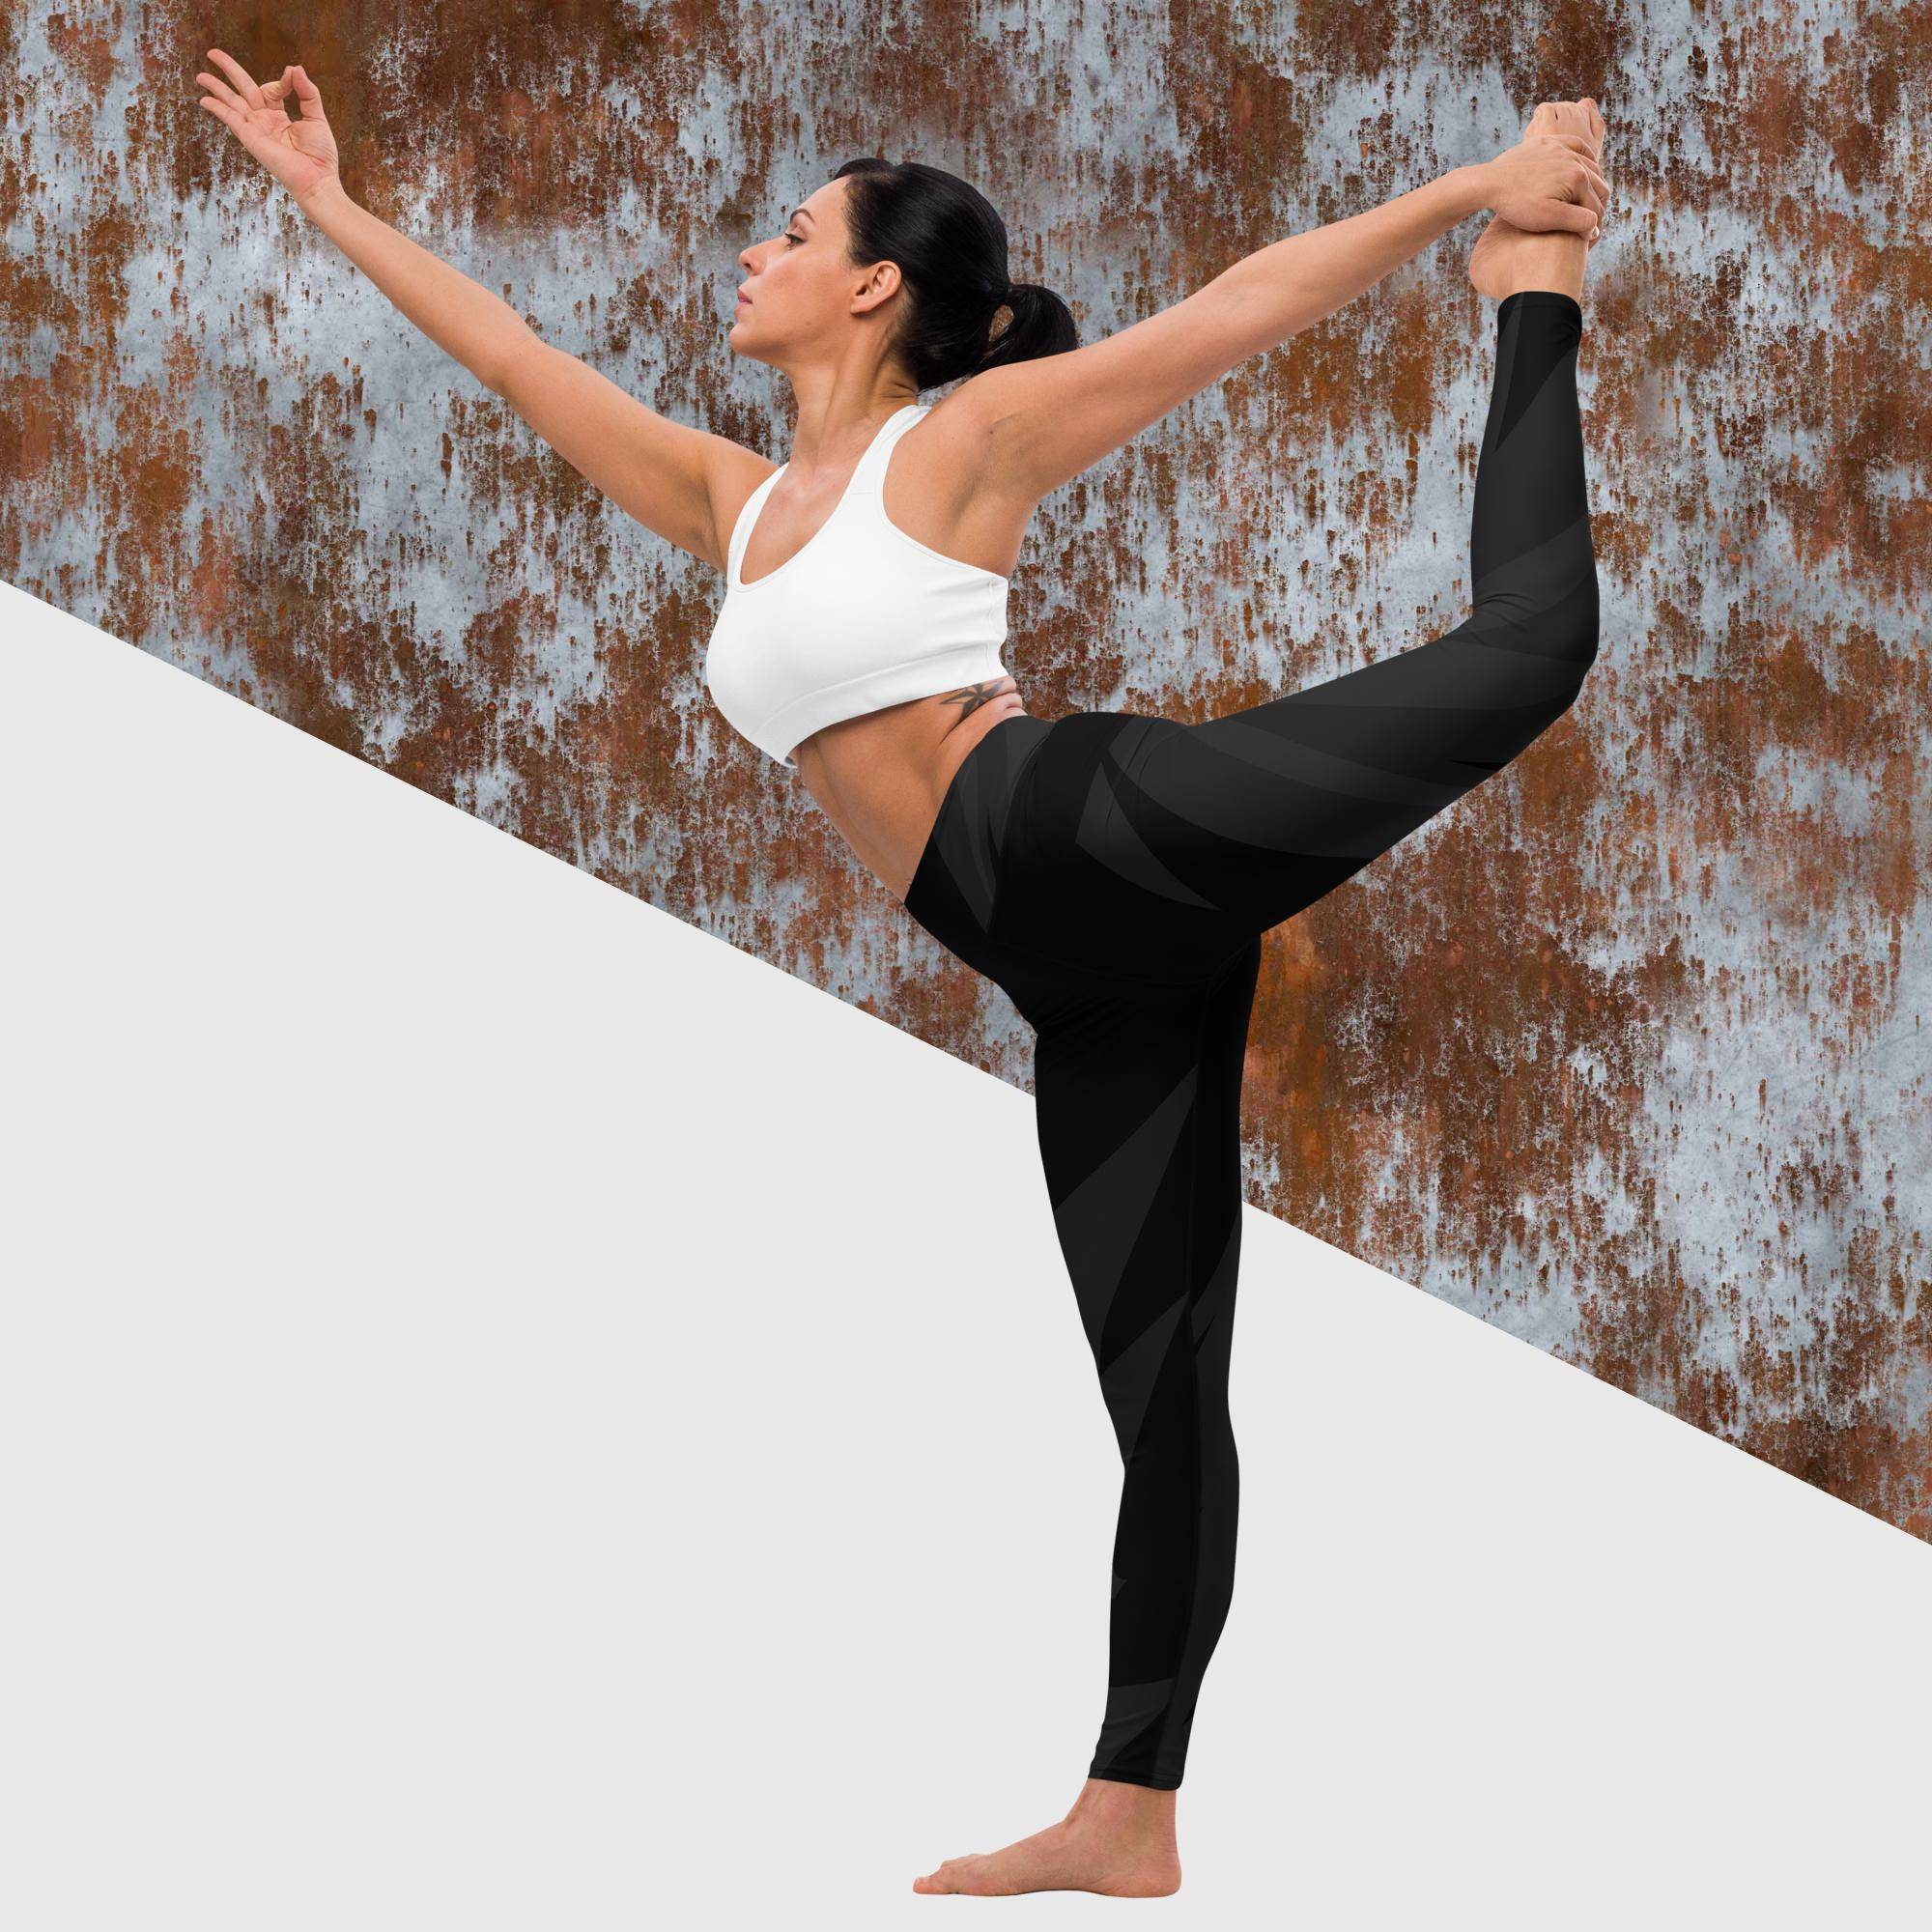 Black Yoga Leggings - Revive Wear     Black Yoga Leggings All Day Comfort. Yoga Leggings that blend high performance with head-turning style. Figure hugging and lightweight. Shop leggings at Revive Wear.